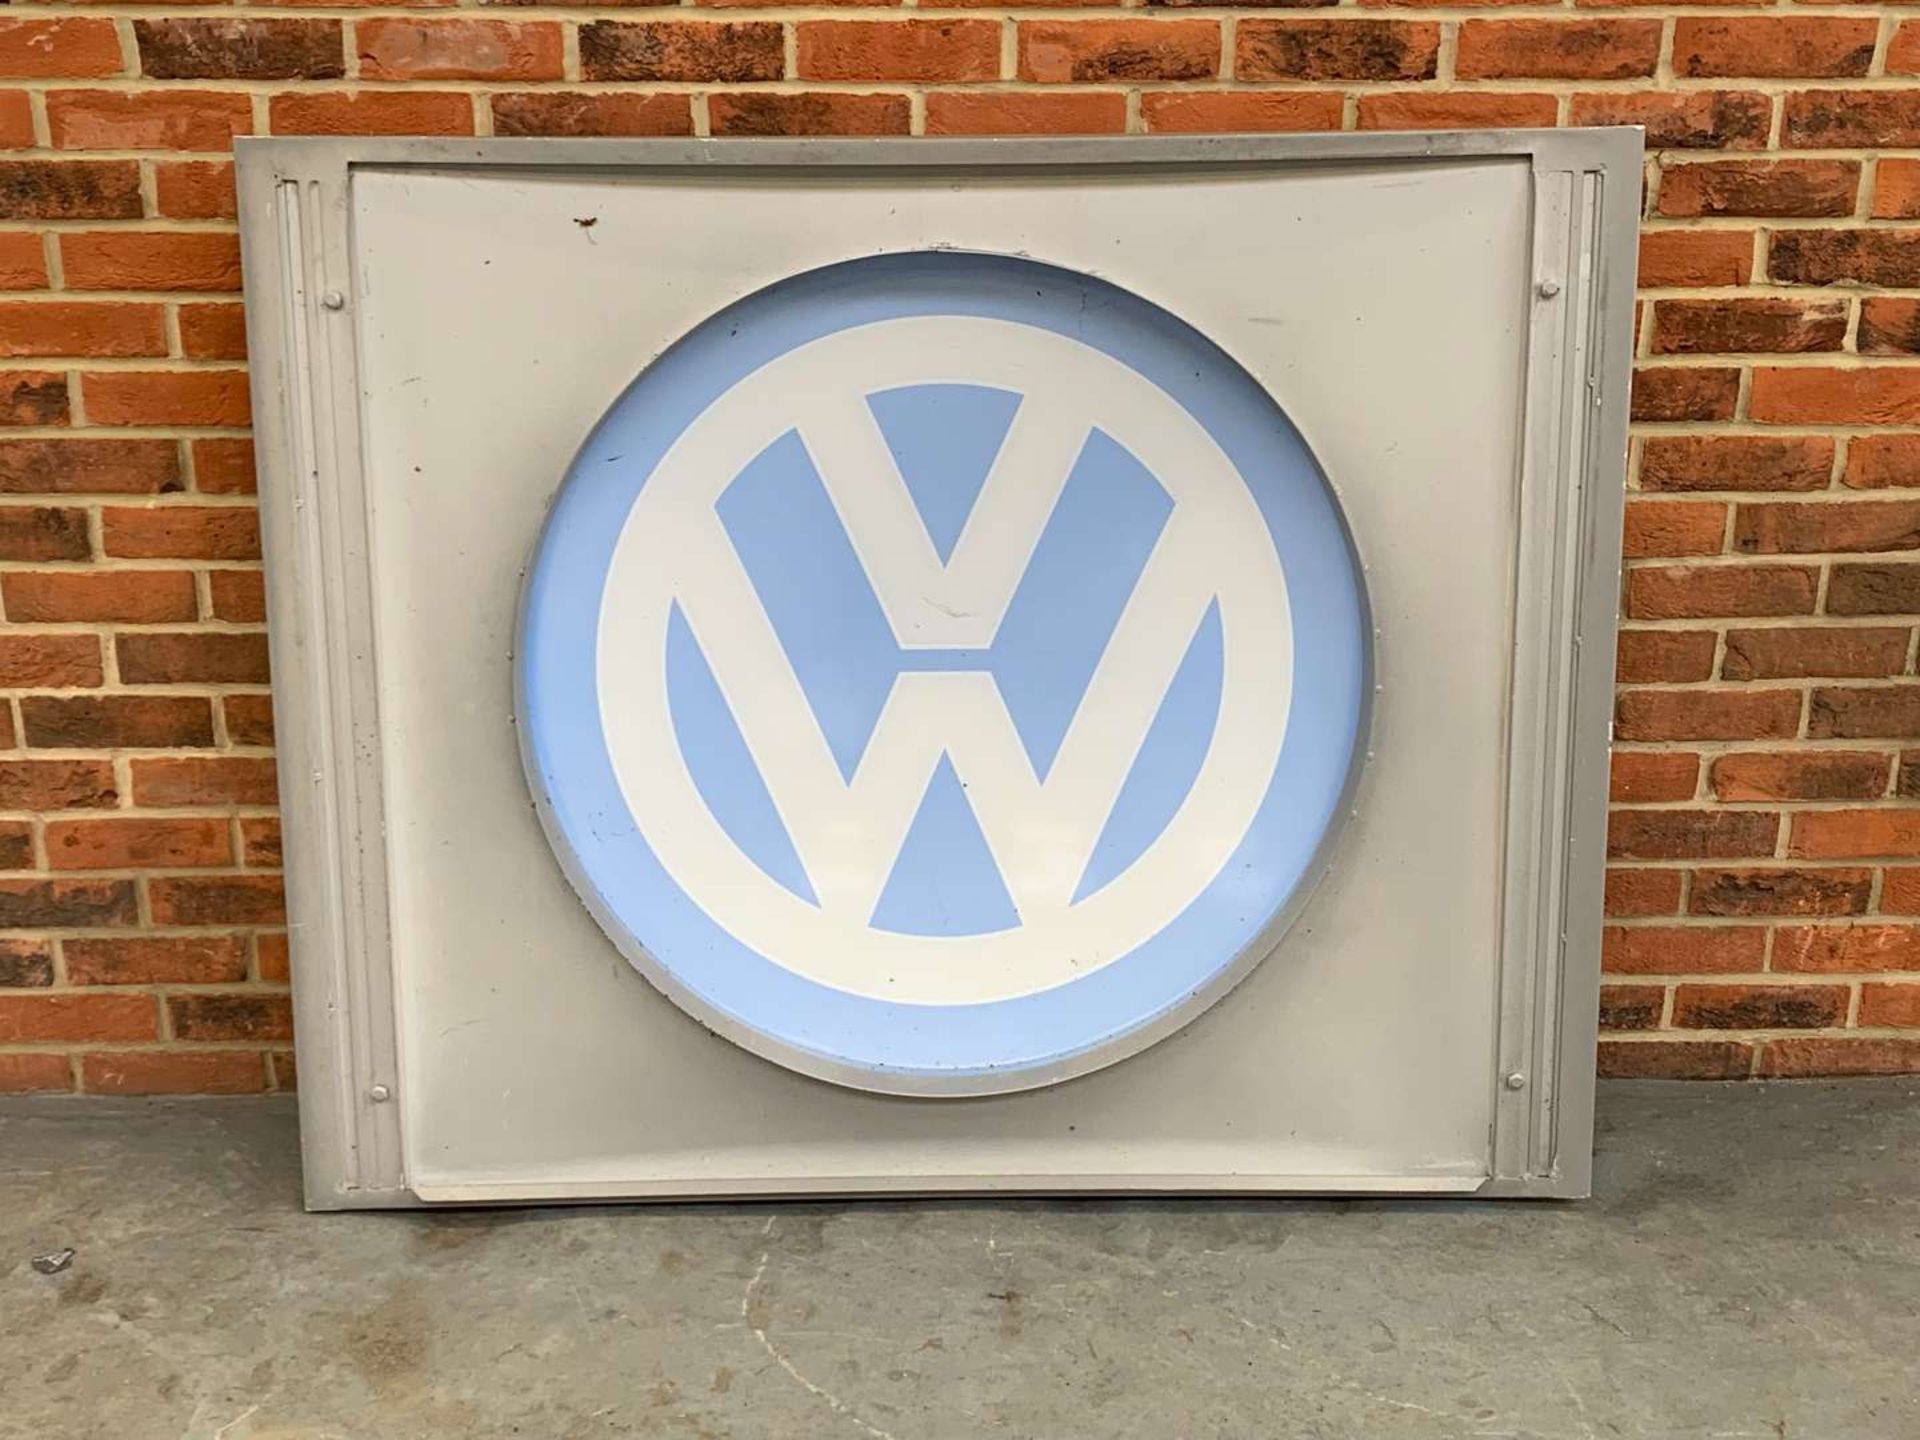 VW Convex Dealership Sign - Image 2 of 2